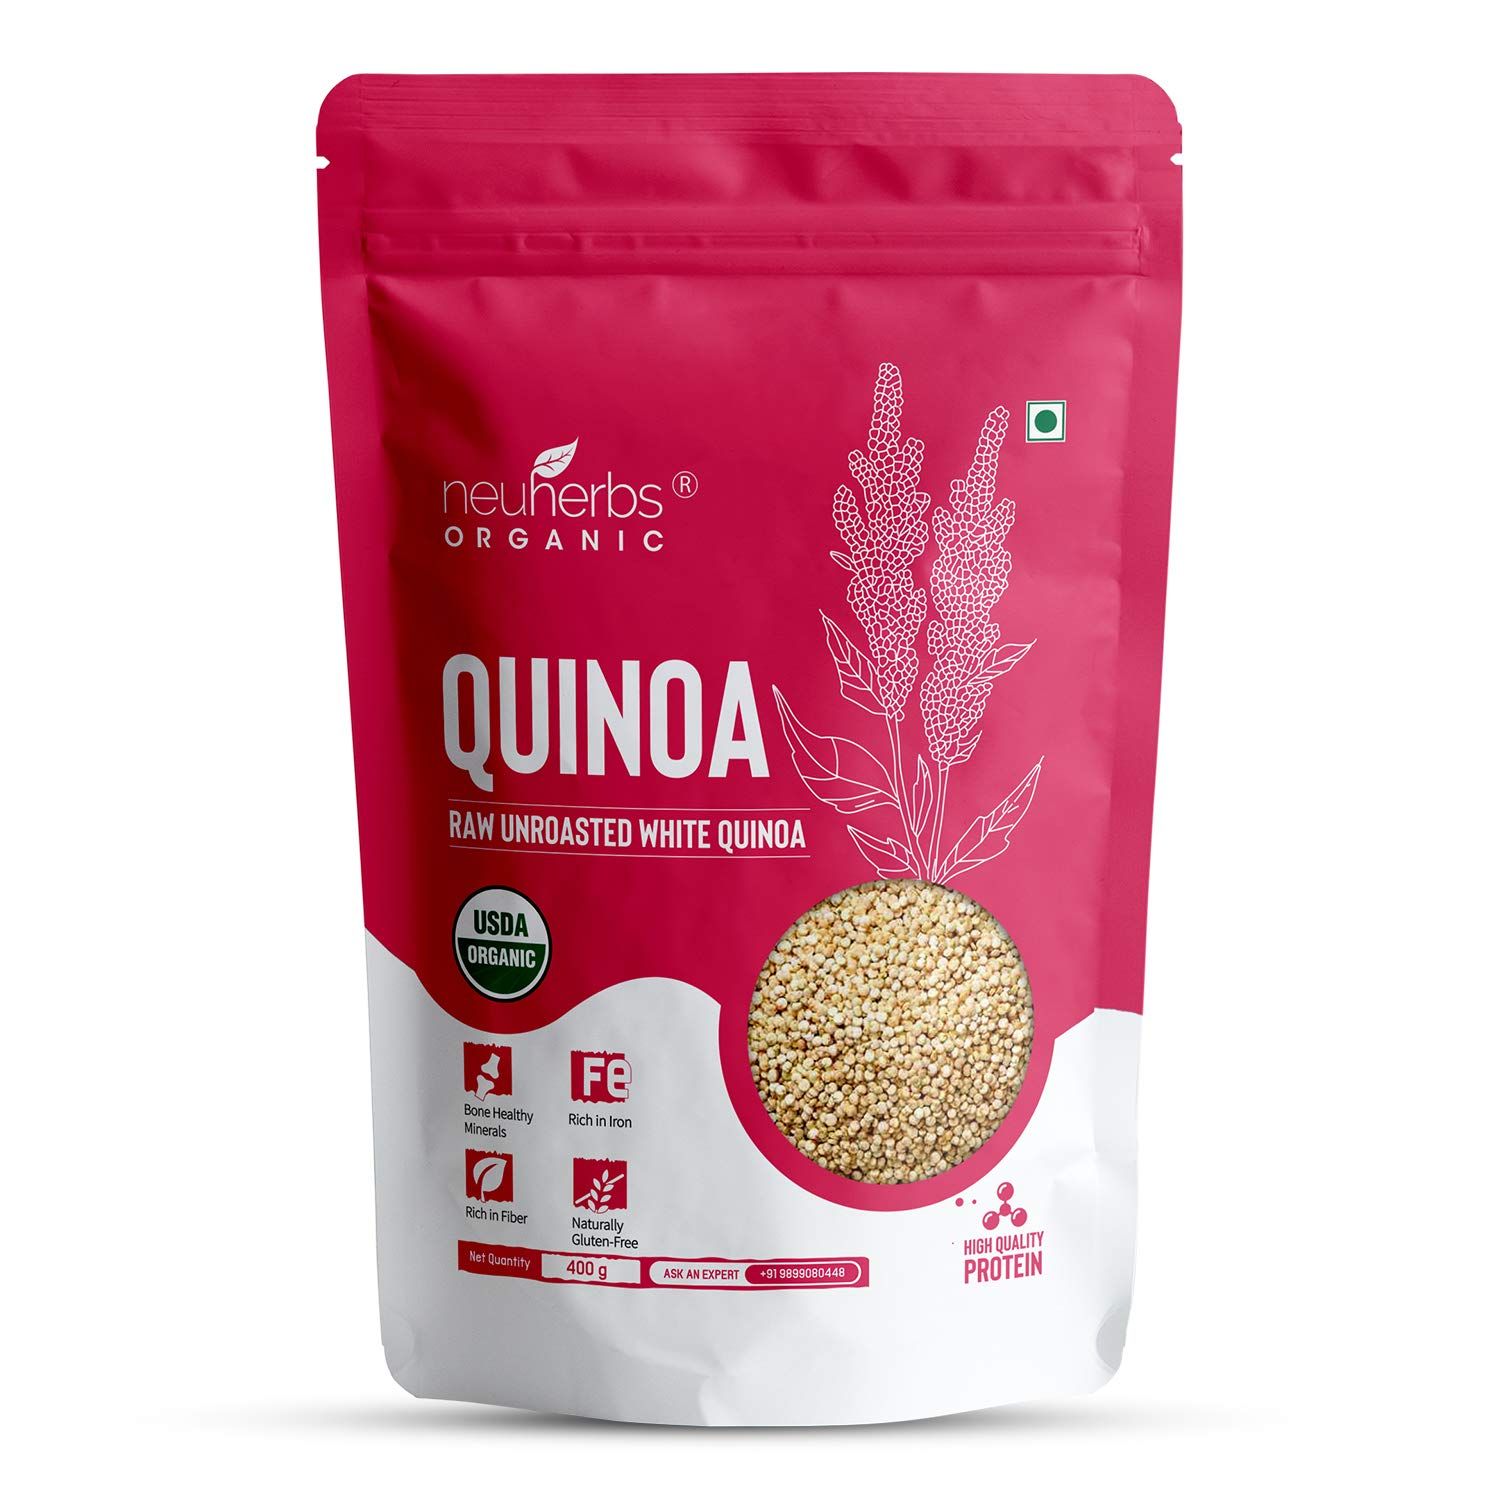 Neuherbs White Quinoa Image